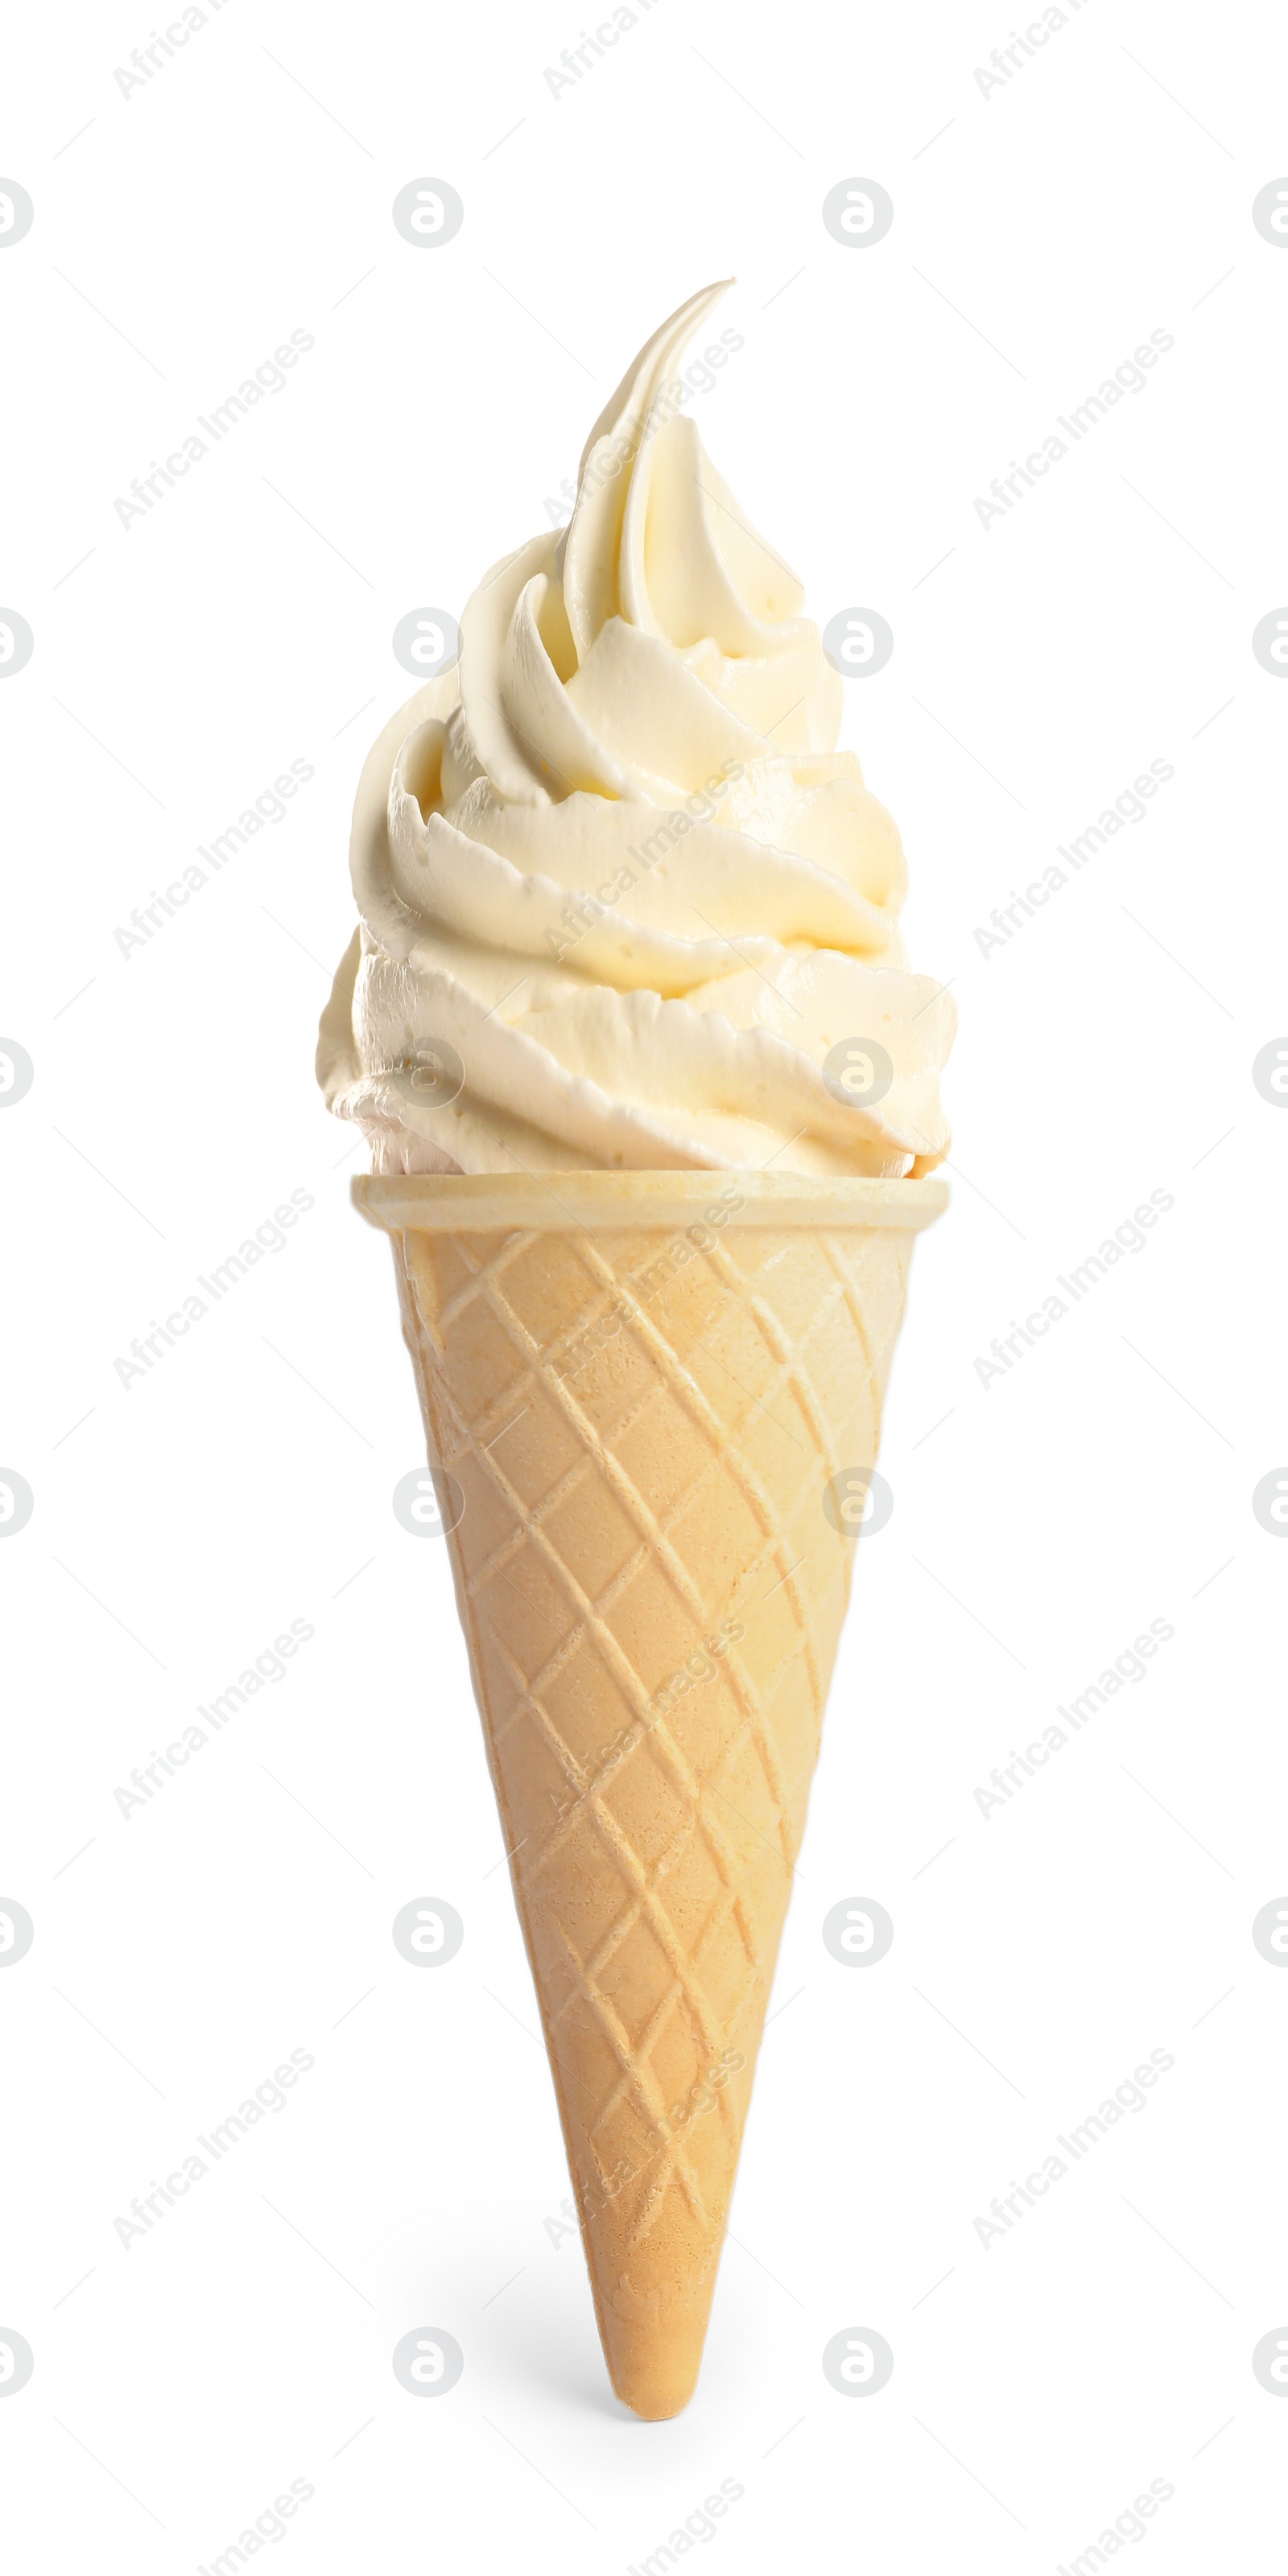 Image of Delicious soft serve vanilla ice cream in crispy cone isolated on white